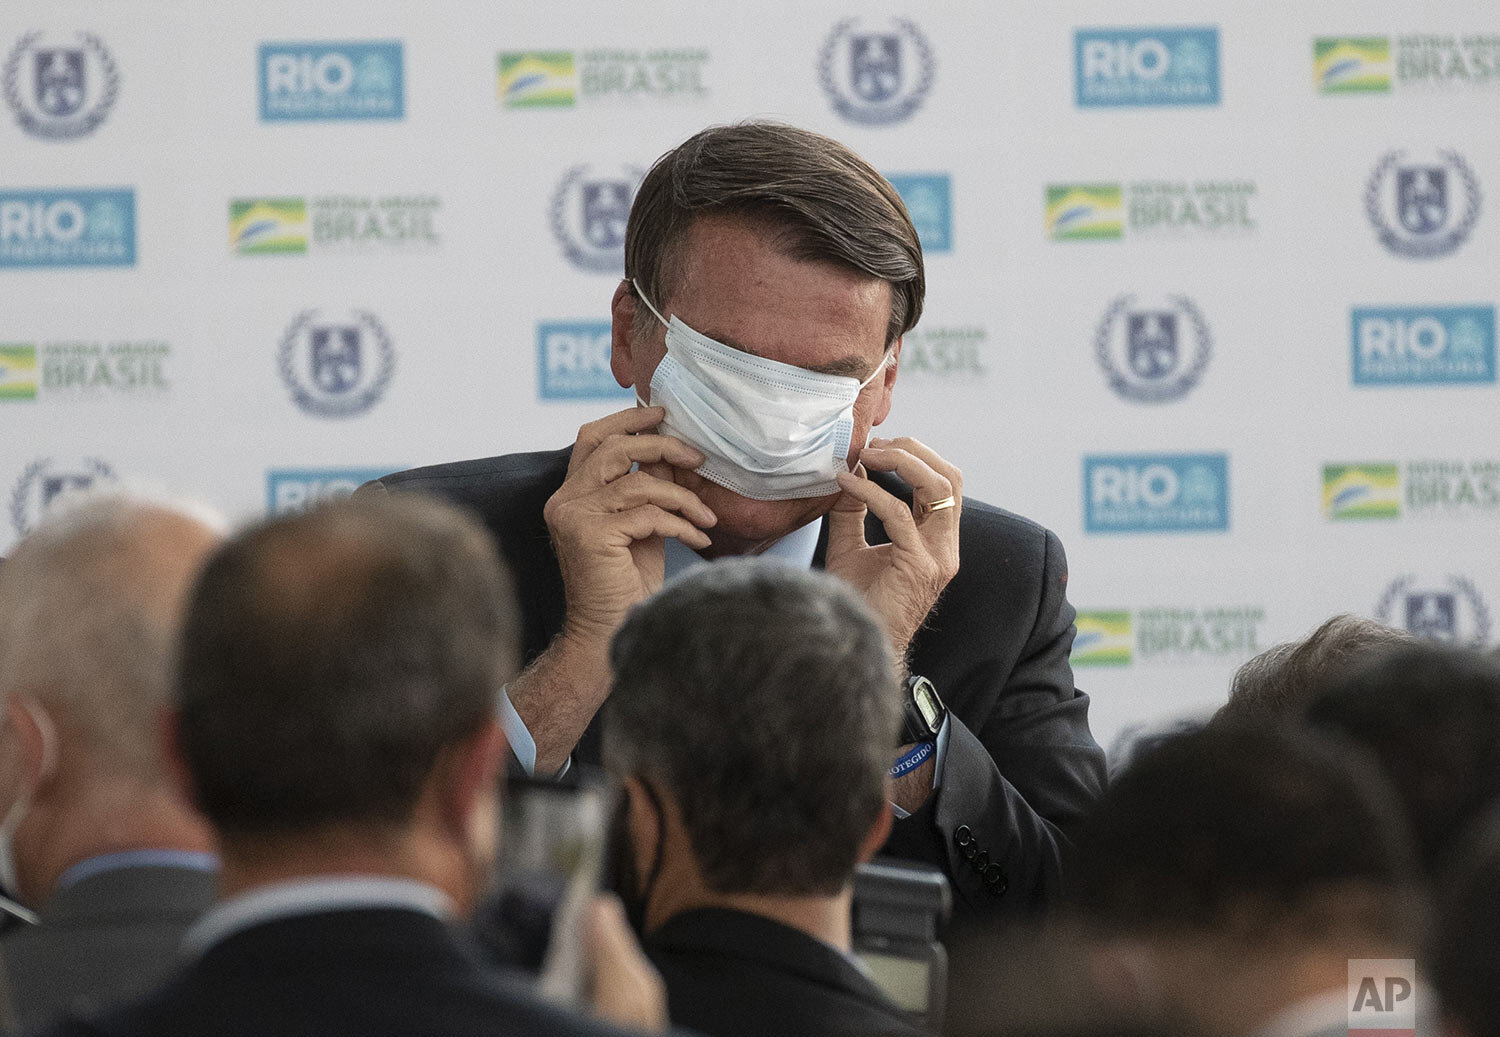  Brazilian President Jair Bolsonaro puts on his mask amid to the COVID-19 pandemic at the inauguration of the new civic-military school General Abreu in Rio de Janeiro, Brazil, Aug. 14, 2020. (AP Photo/Silvia Izquierdo) 